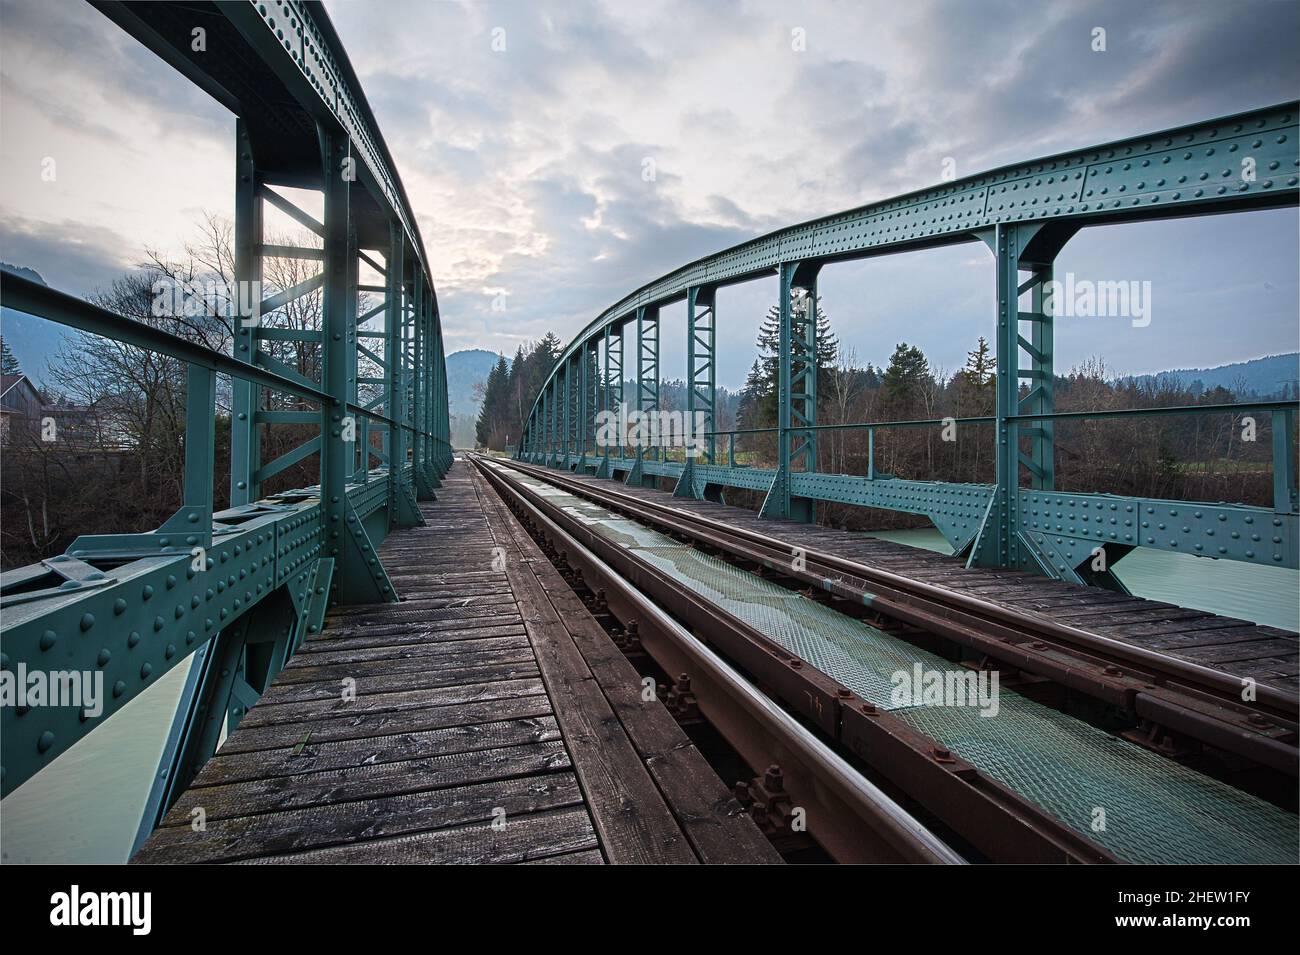 railway train bridge with cyan painted steel framework over river Stock Photo